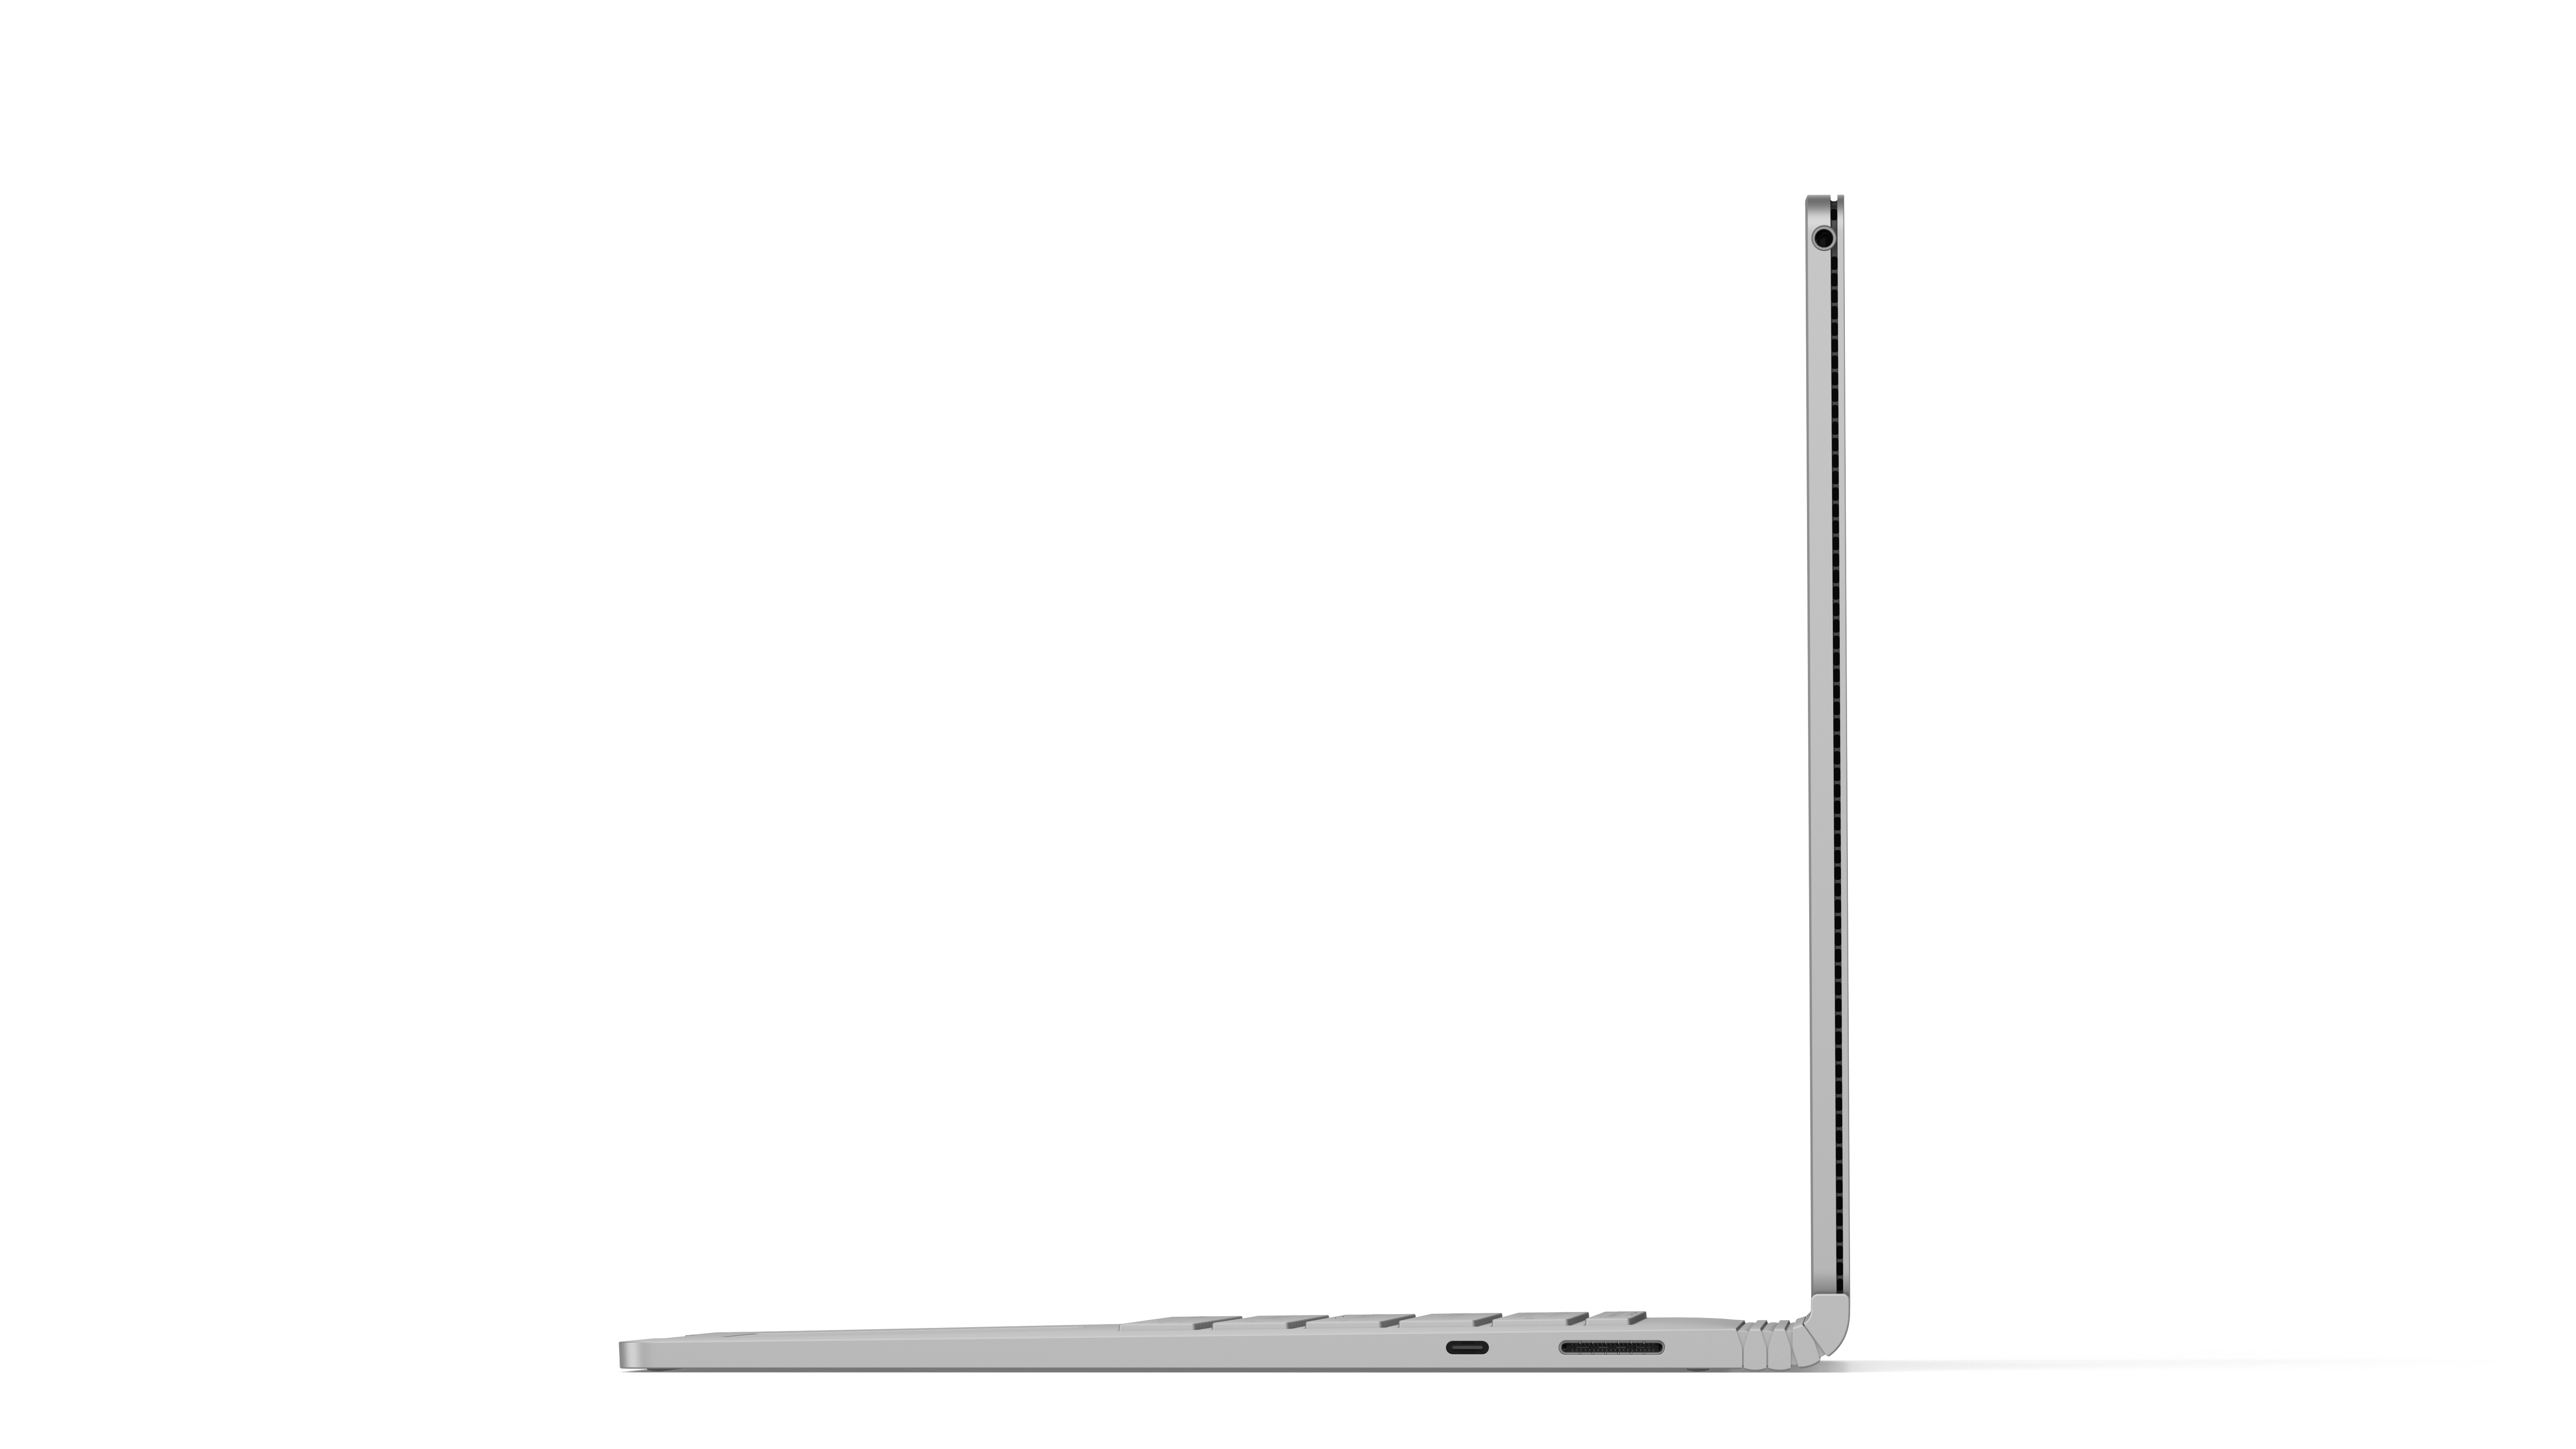 Microsoft Surface Book 3, 13" Touchscreen Laptop, Intel Core i5, 8GB RAM, 256GB SSD, Windows 10, Platinum, V6F-00001 - image 5 of 9